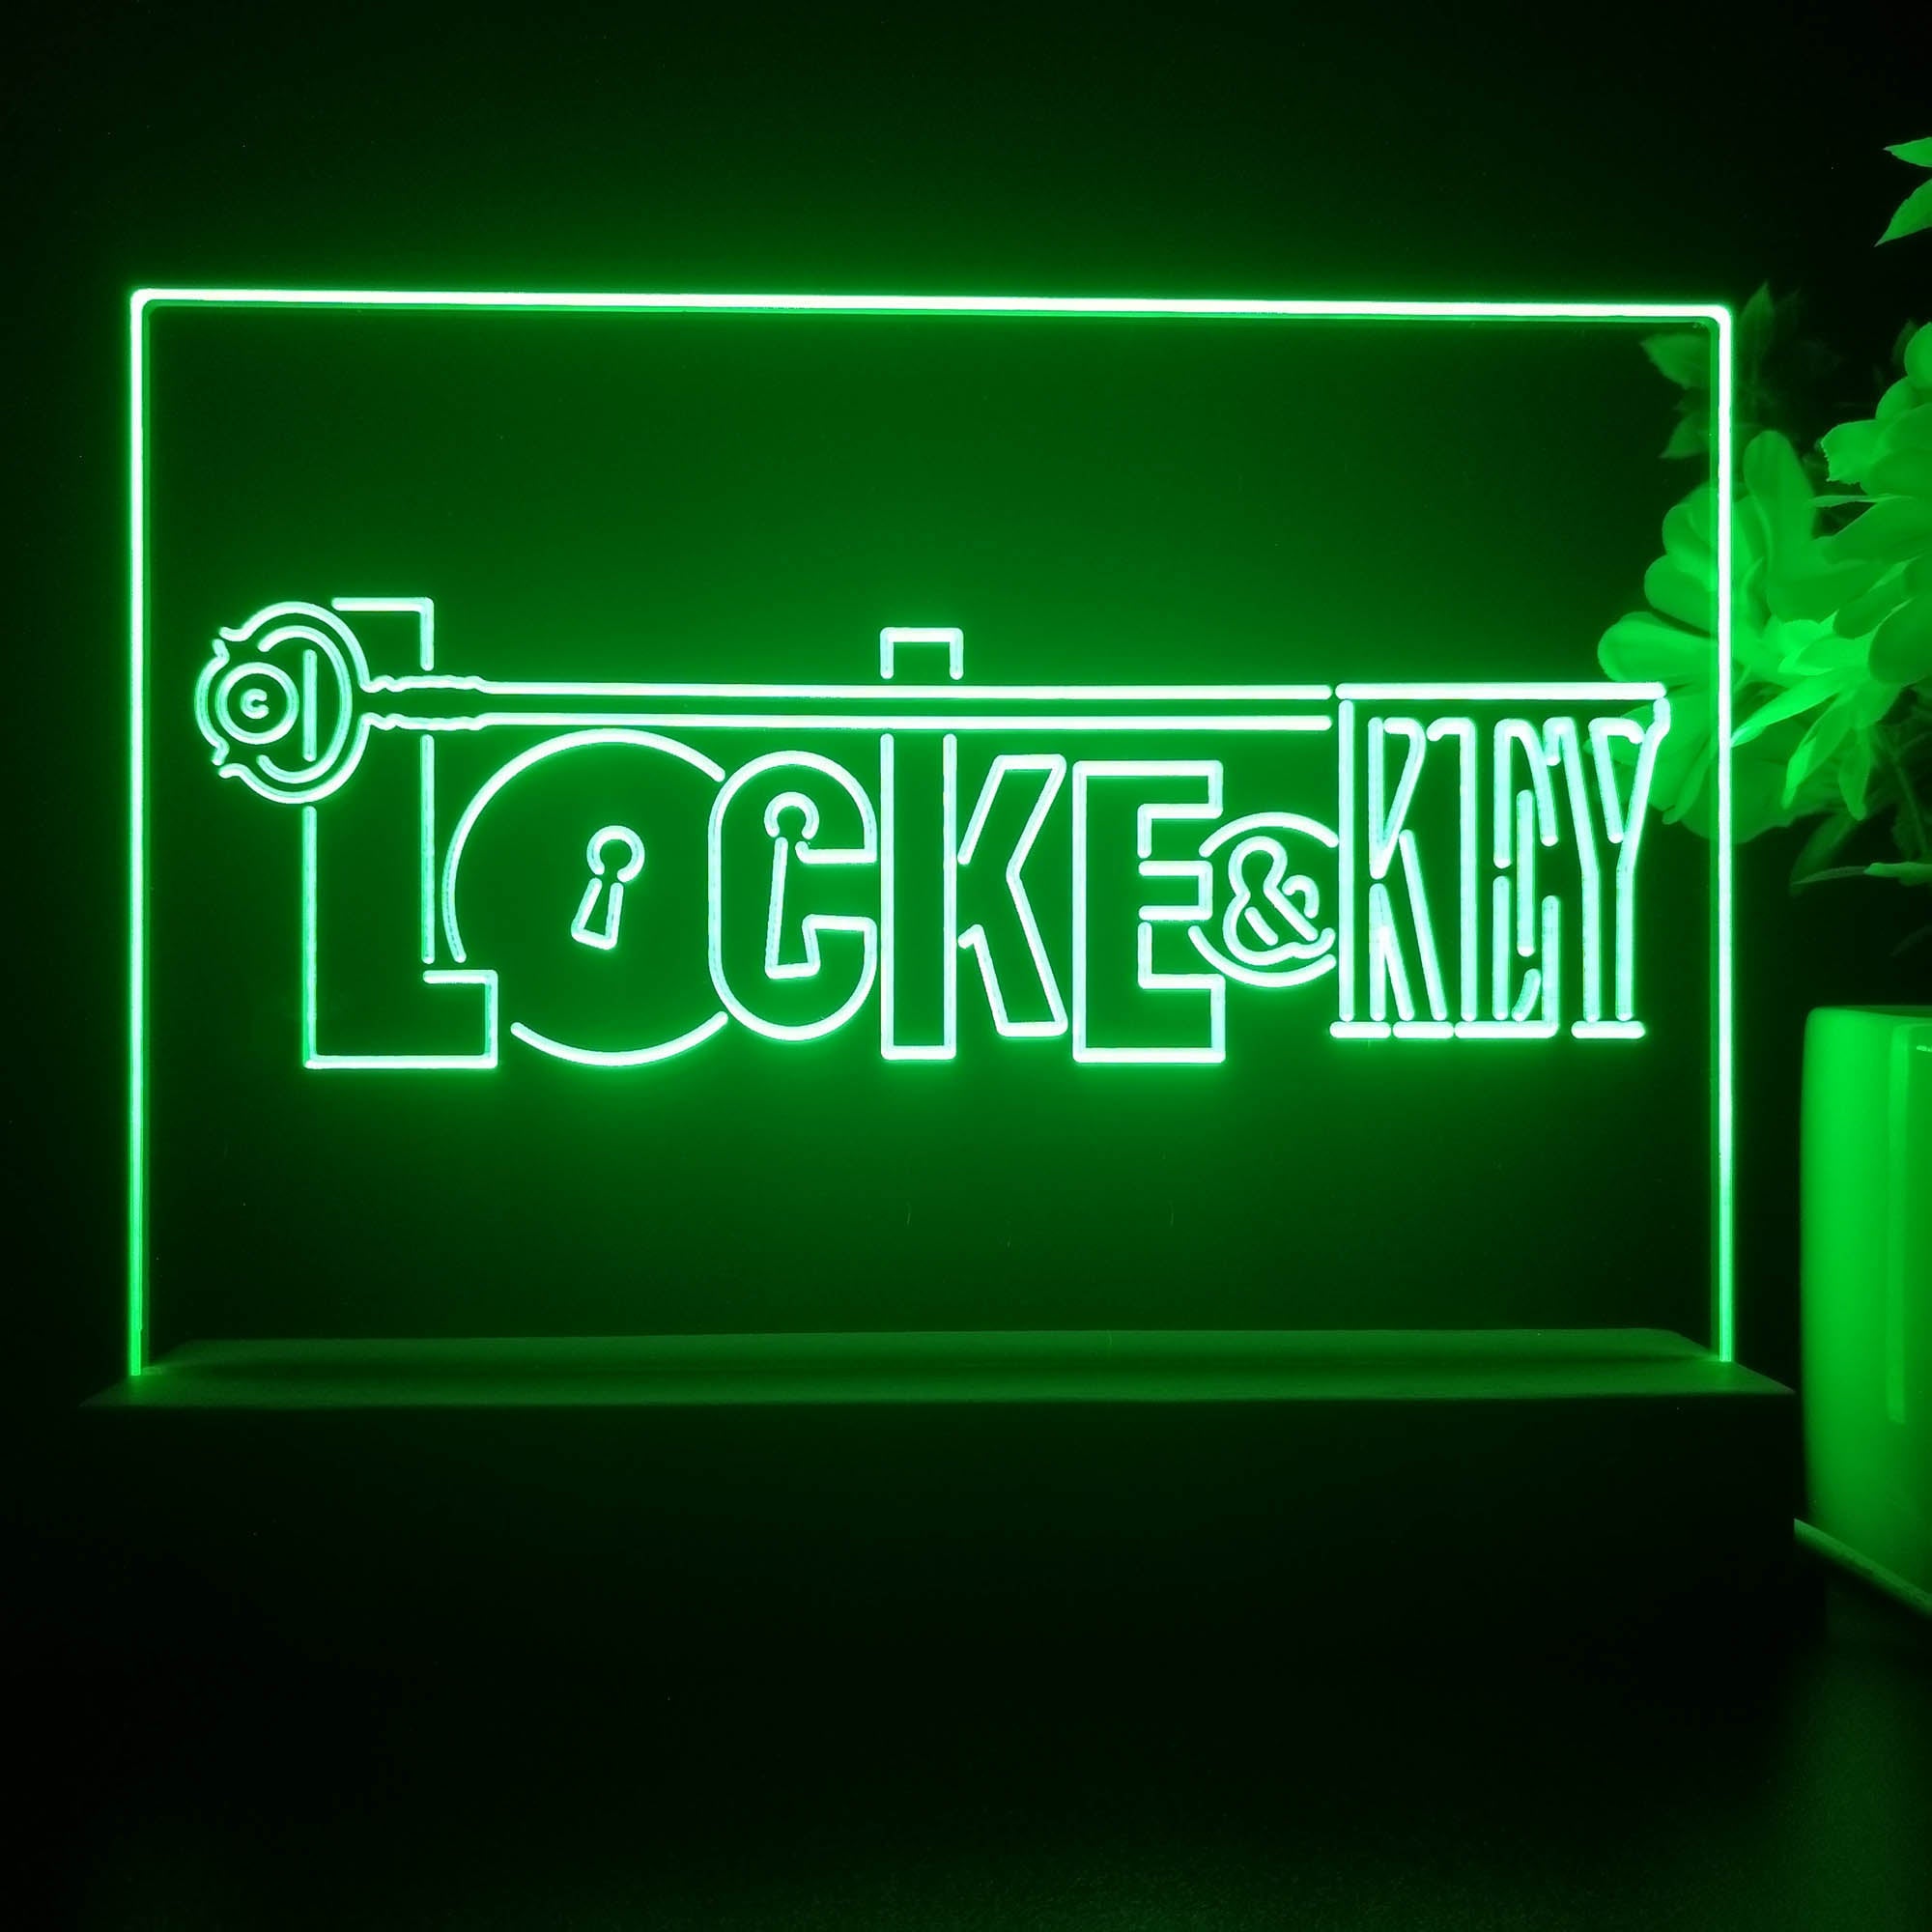 Locke & Key 3D Illusion Night Light Desk Lamp